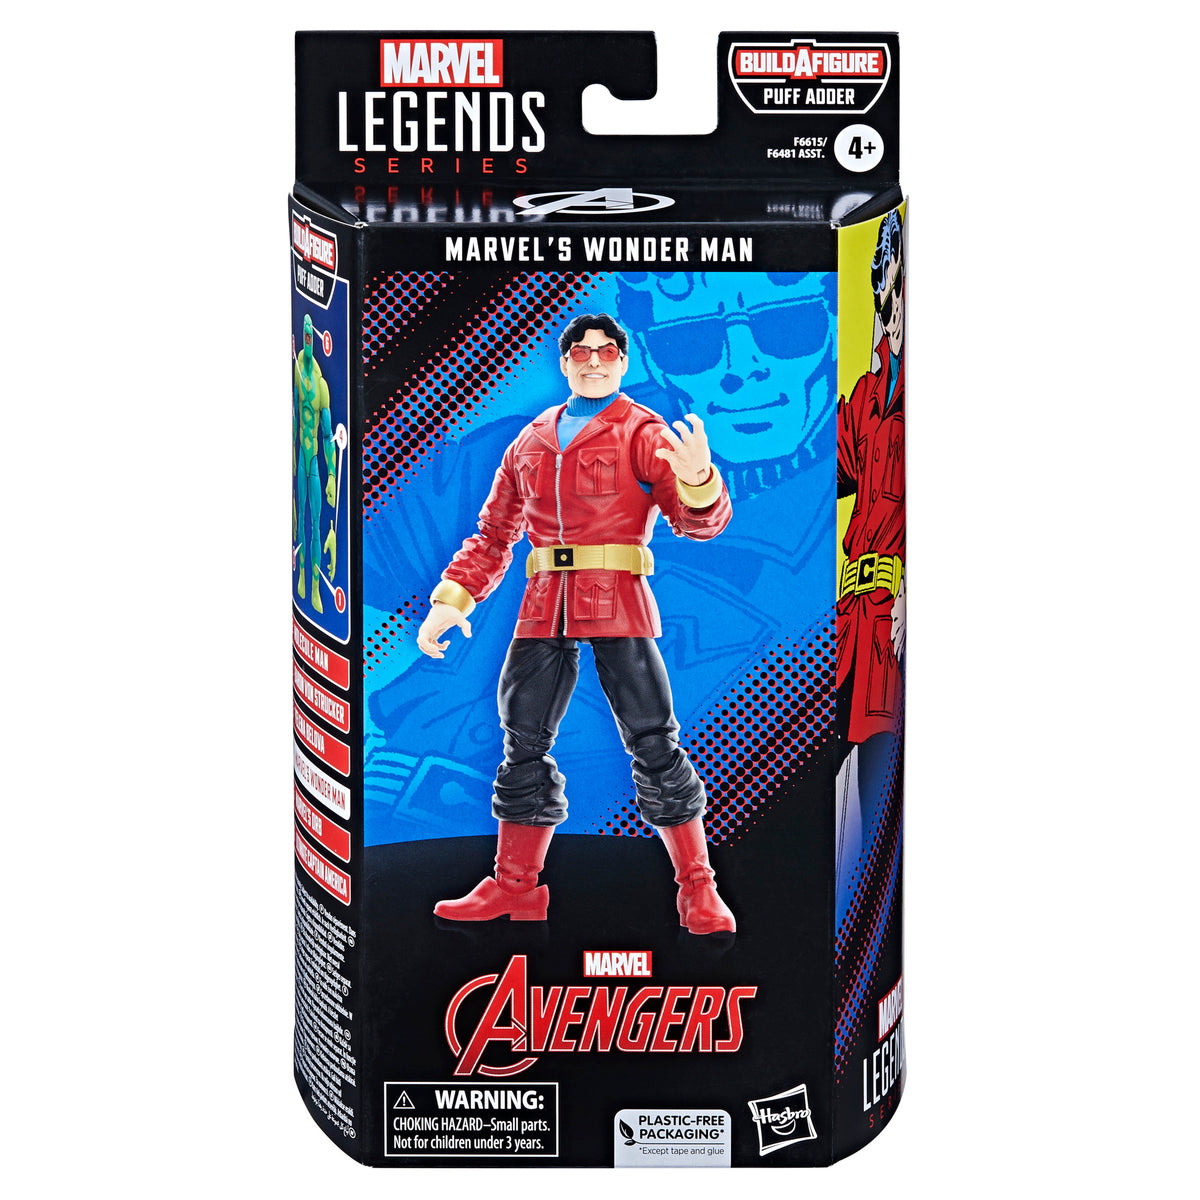 Sembrar Crudo picar Marvel Legends Series: Marvel's Wonder Man Figure – Hasbro Pulse